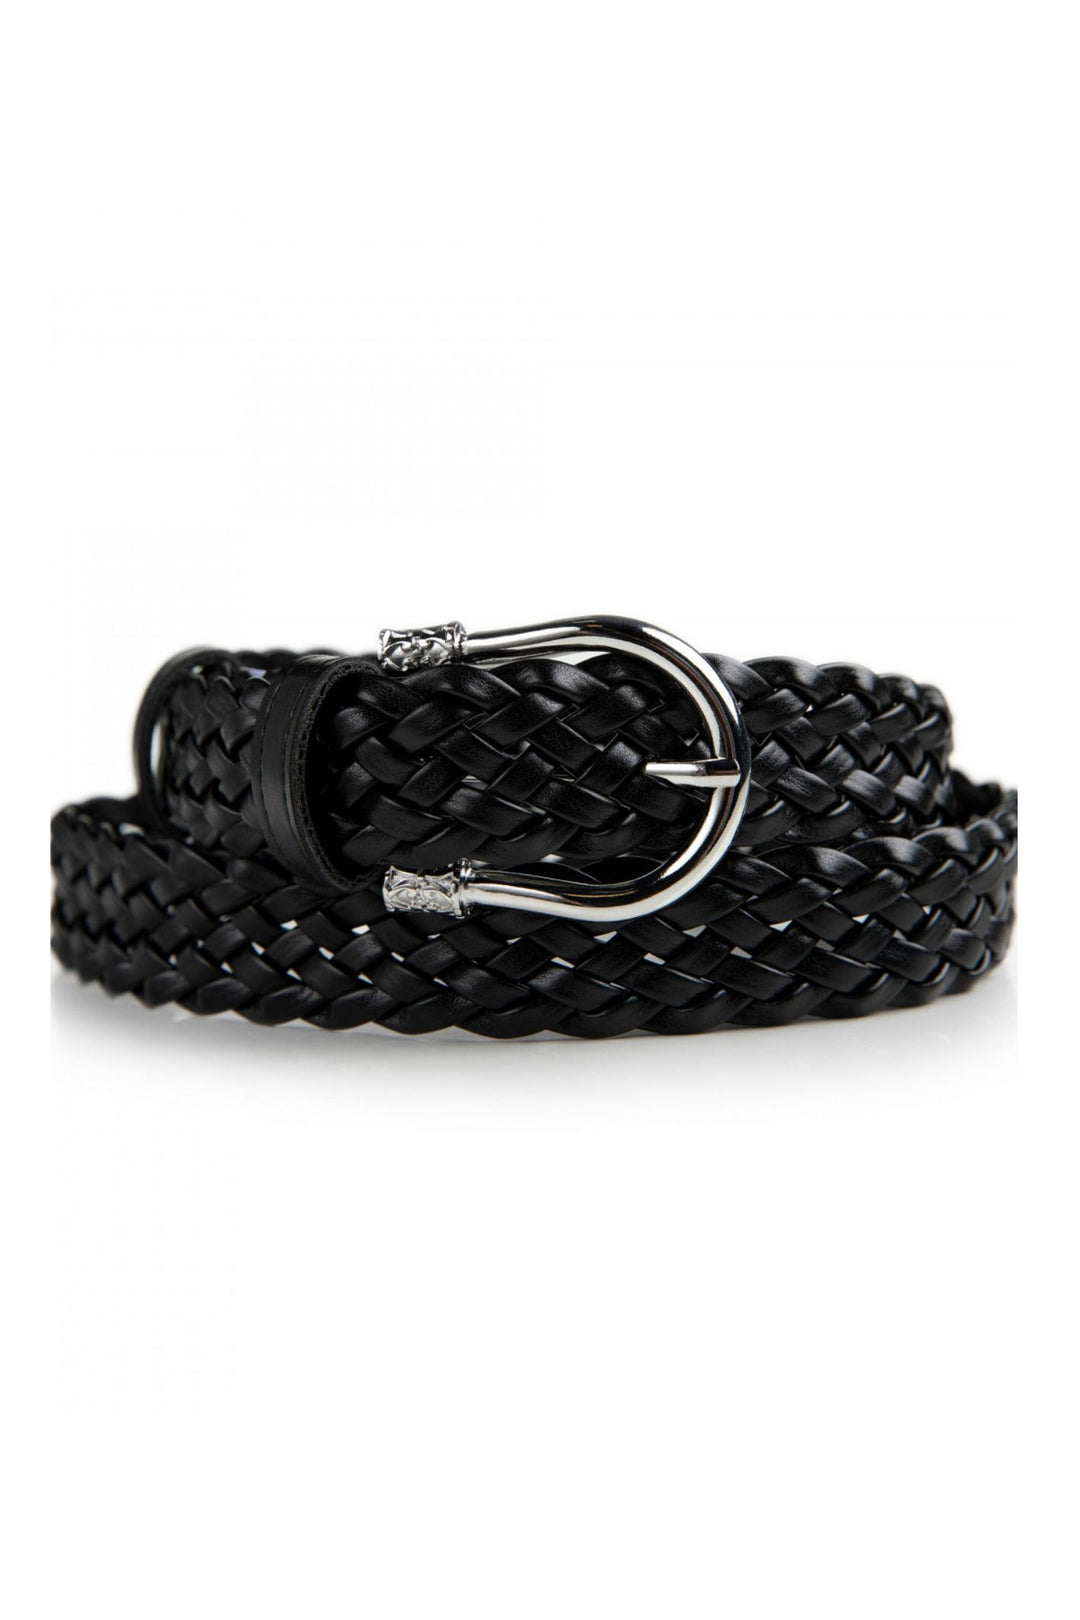 Access Fashion Black Braided Faux Leather Belt